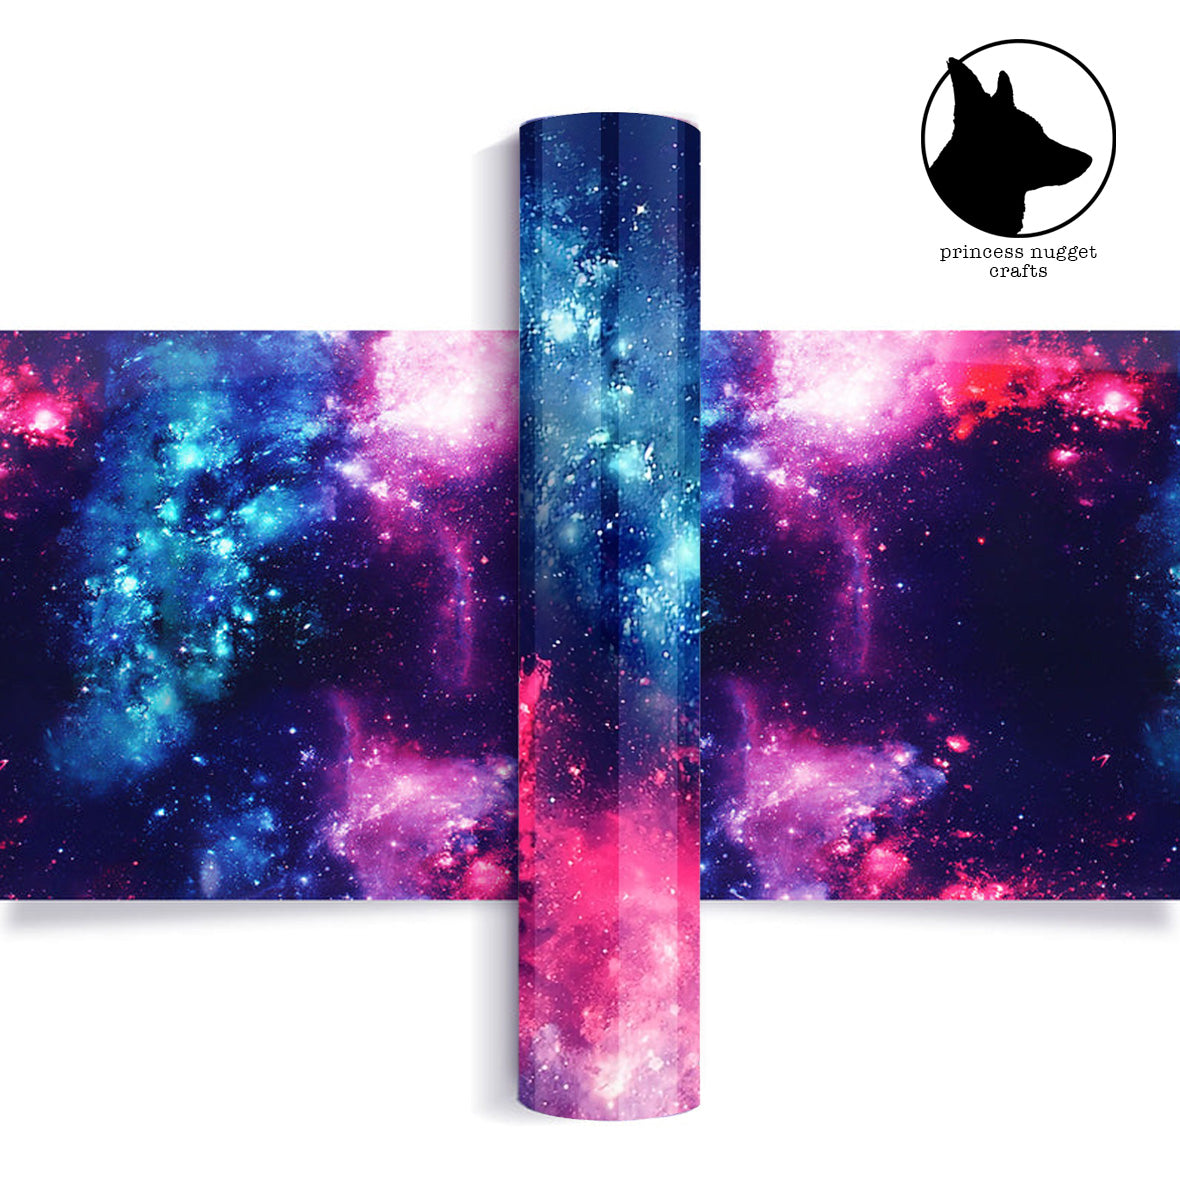 FLEX Galaxy Nebula Cyanine Black - Princess Nugget crafts